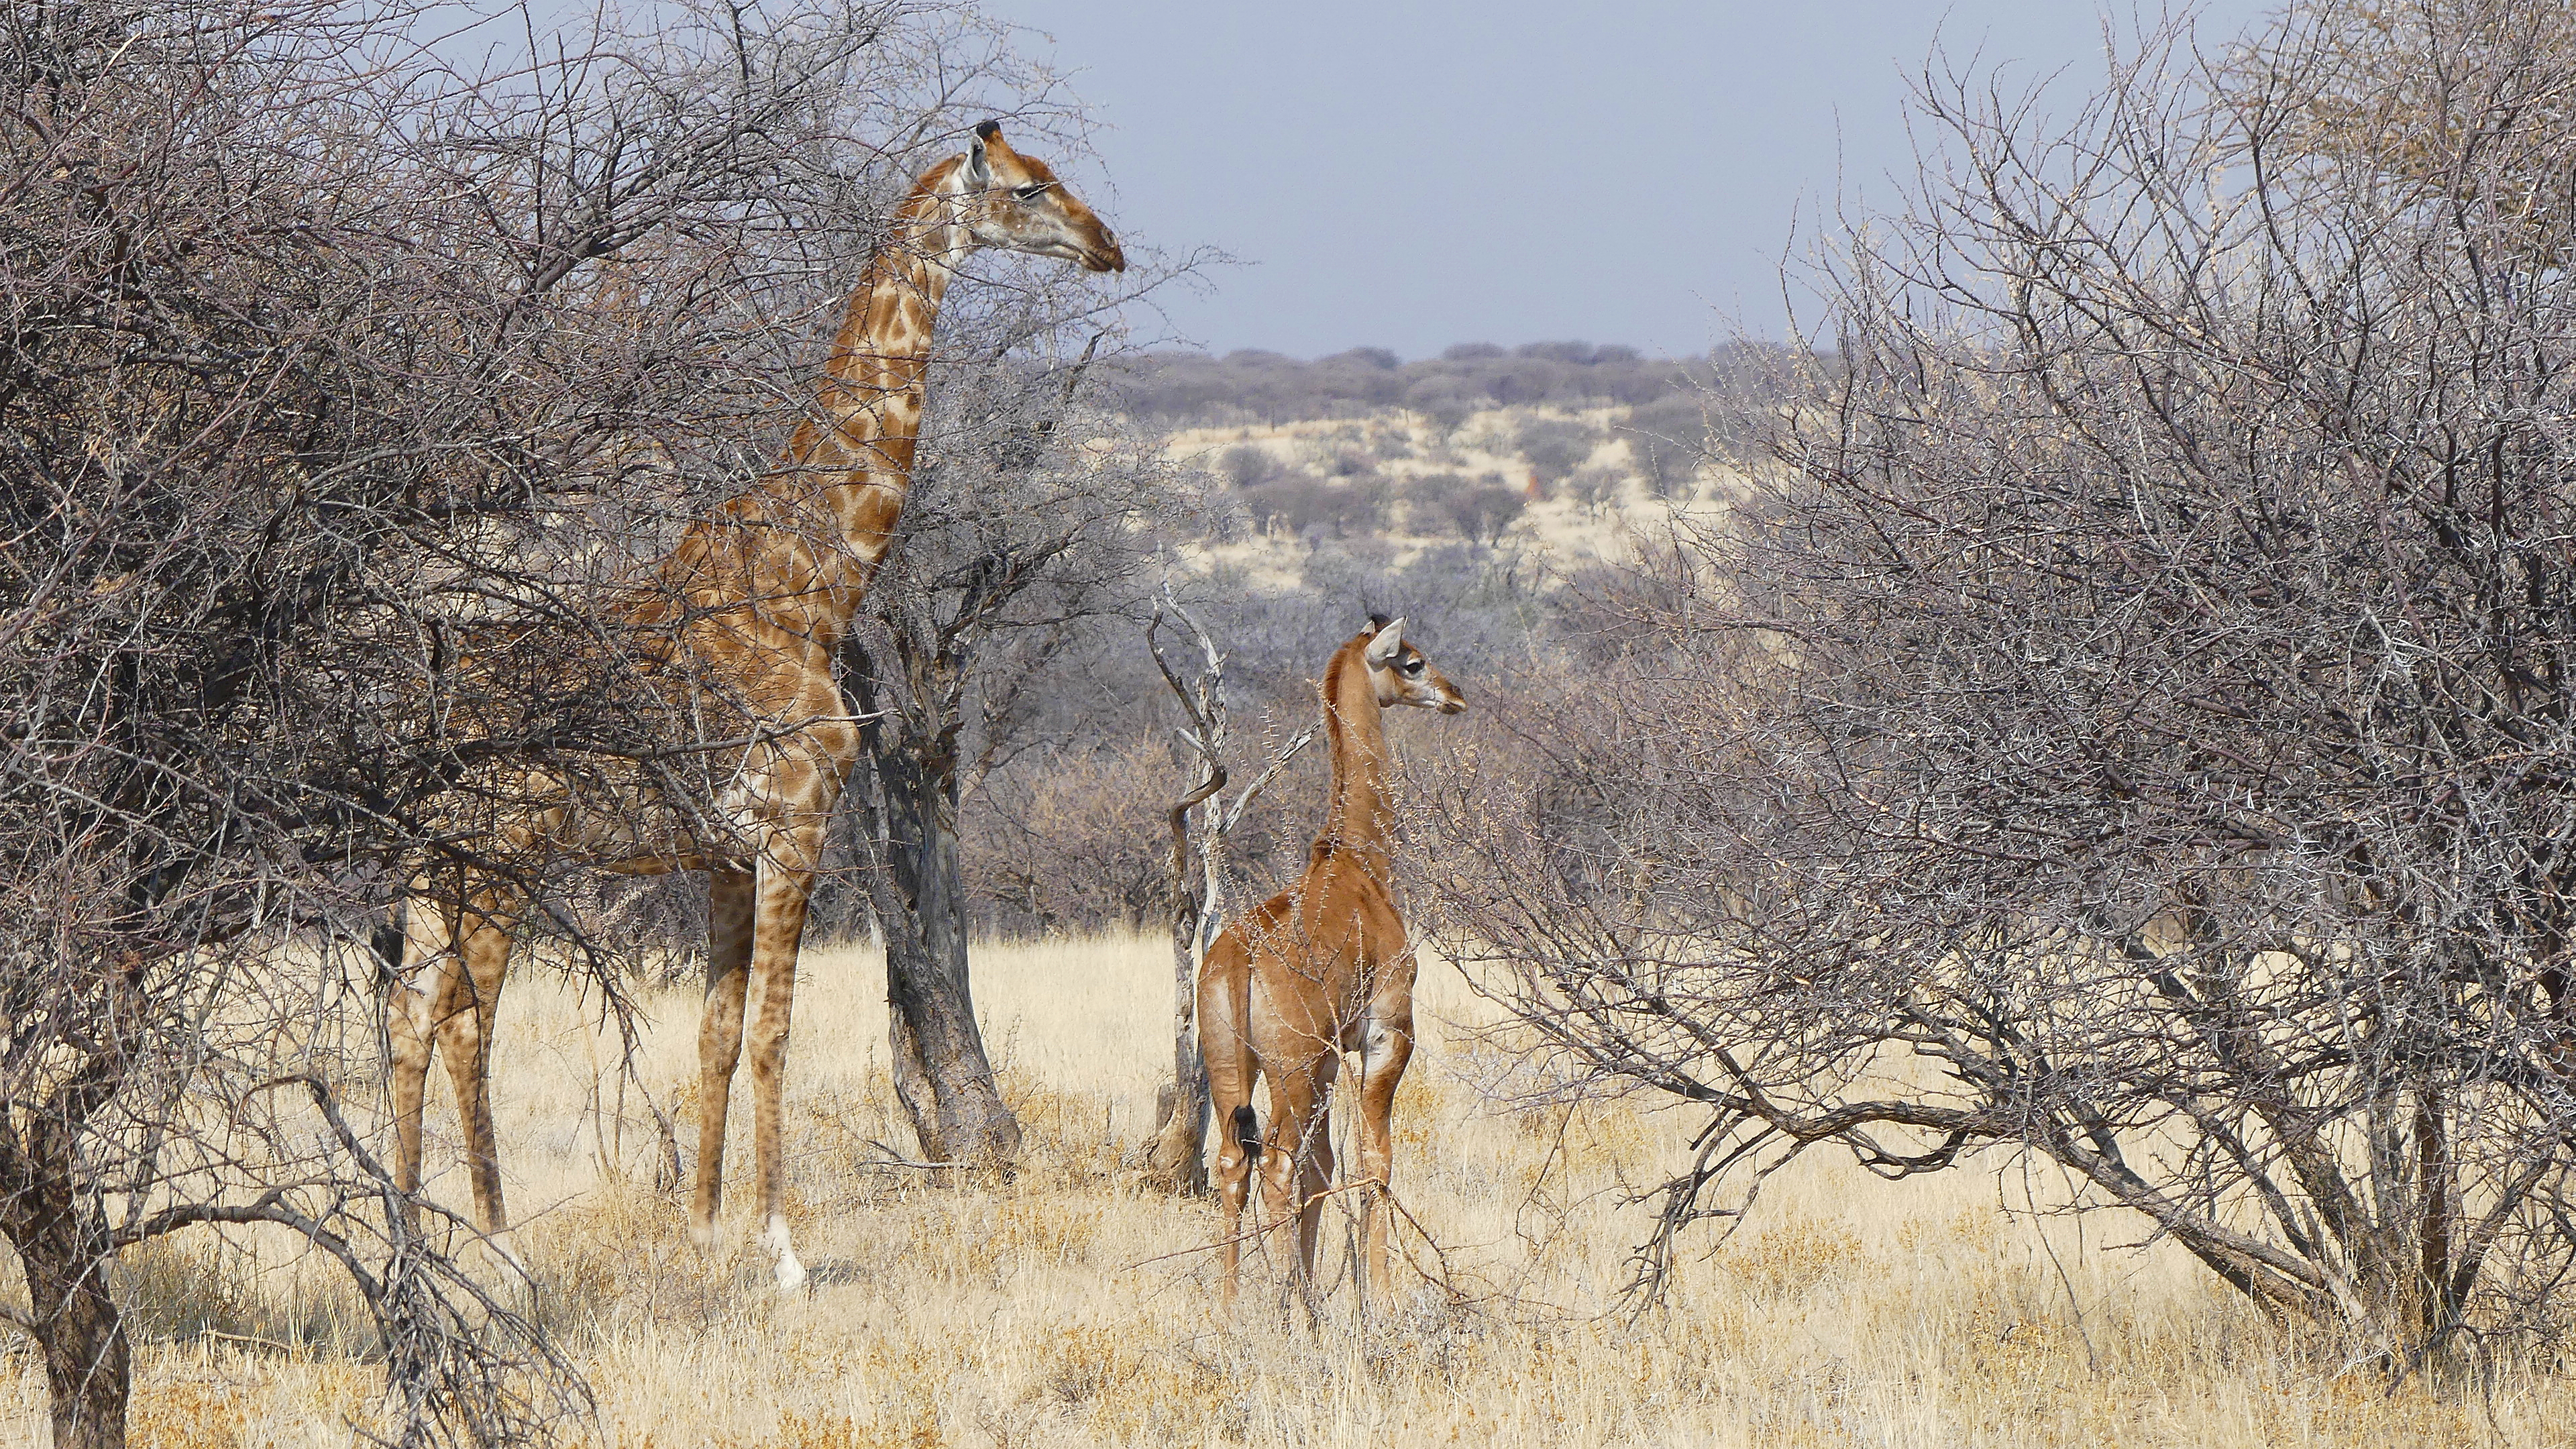 Spotless giraffe and mother